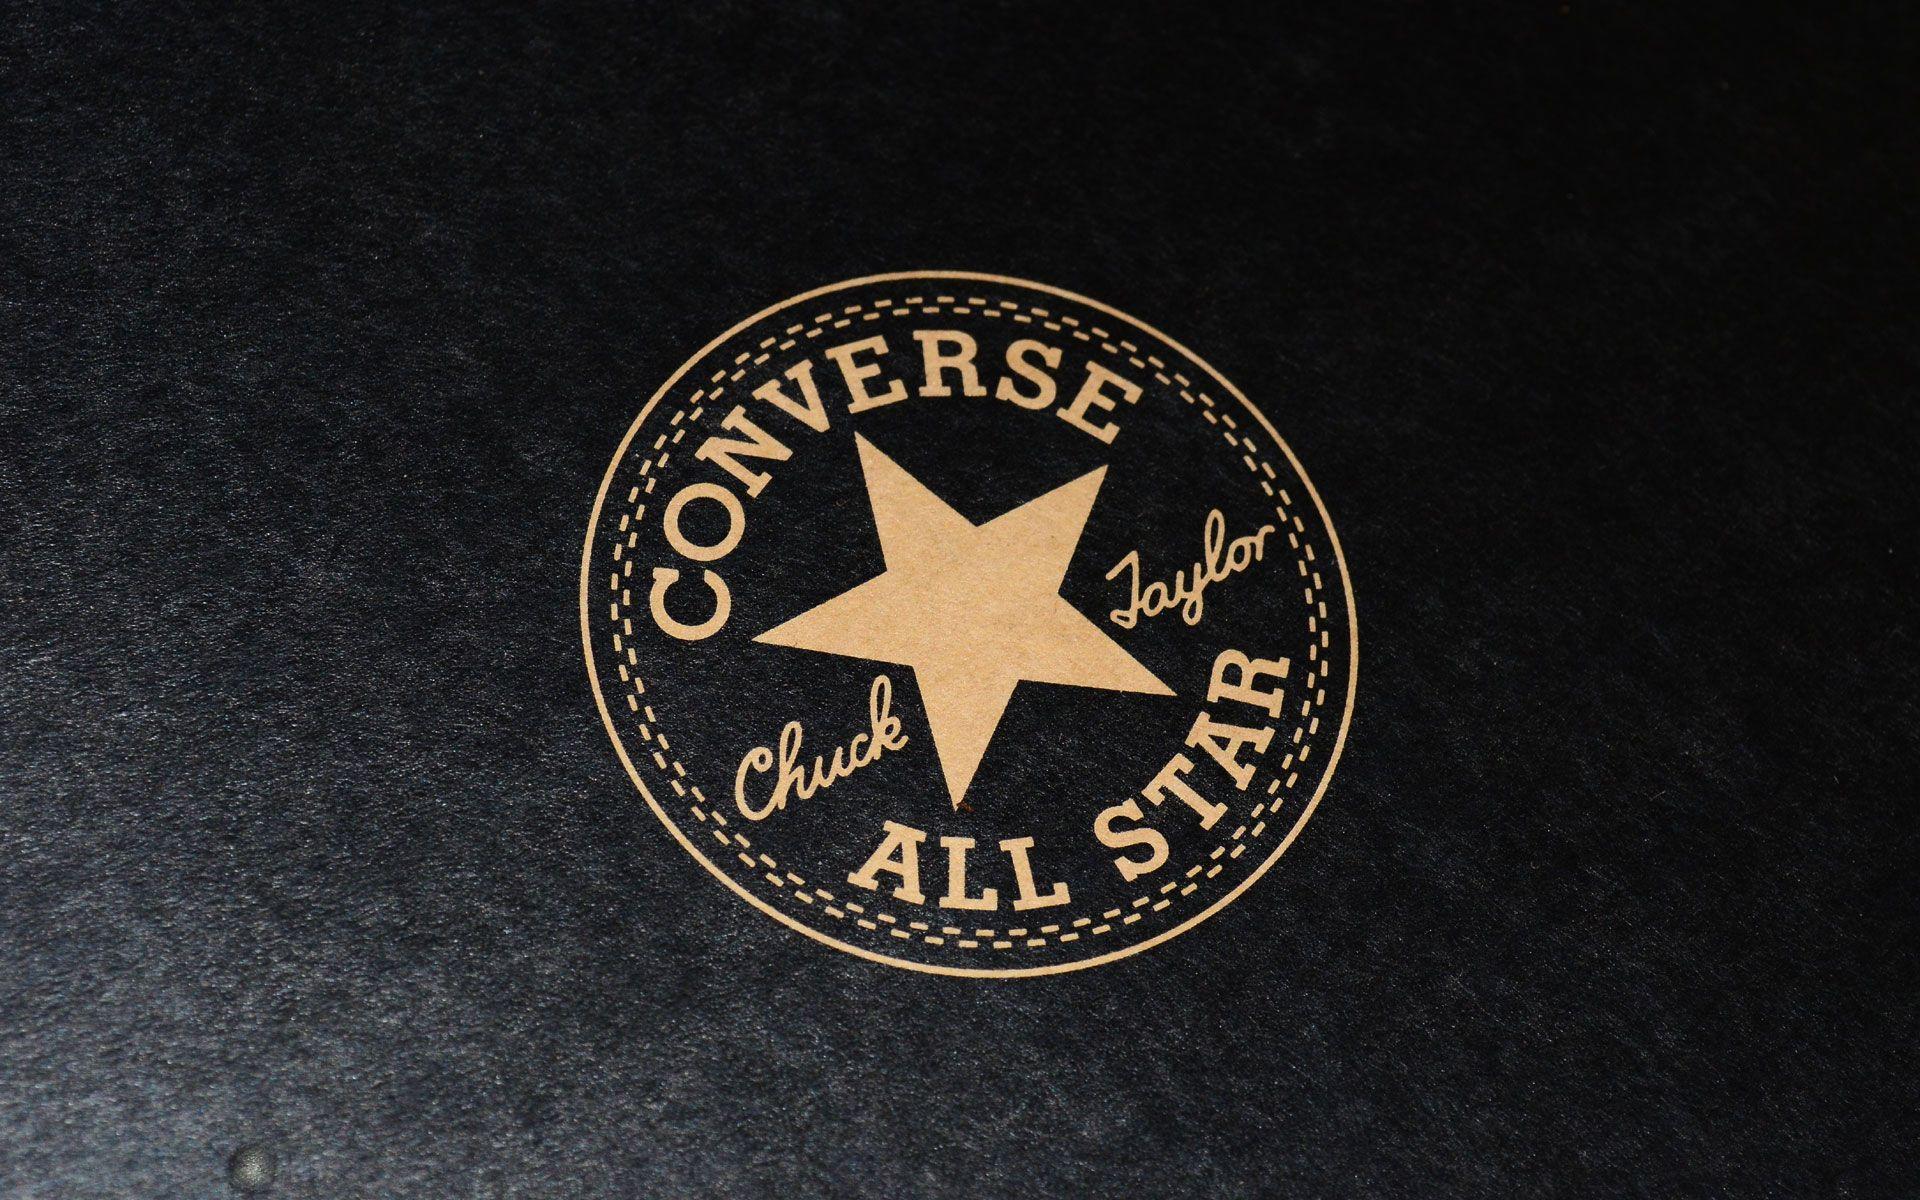 Black Converse All Star Wallpaper HD Widescreen. High Quality PC